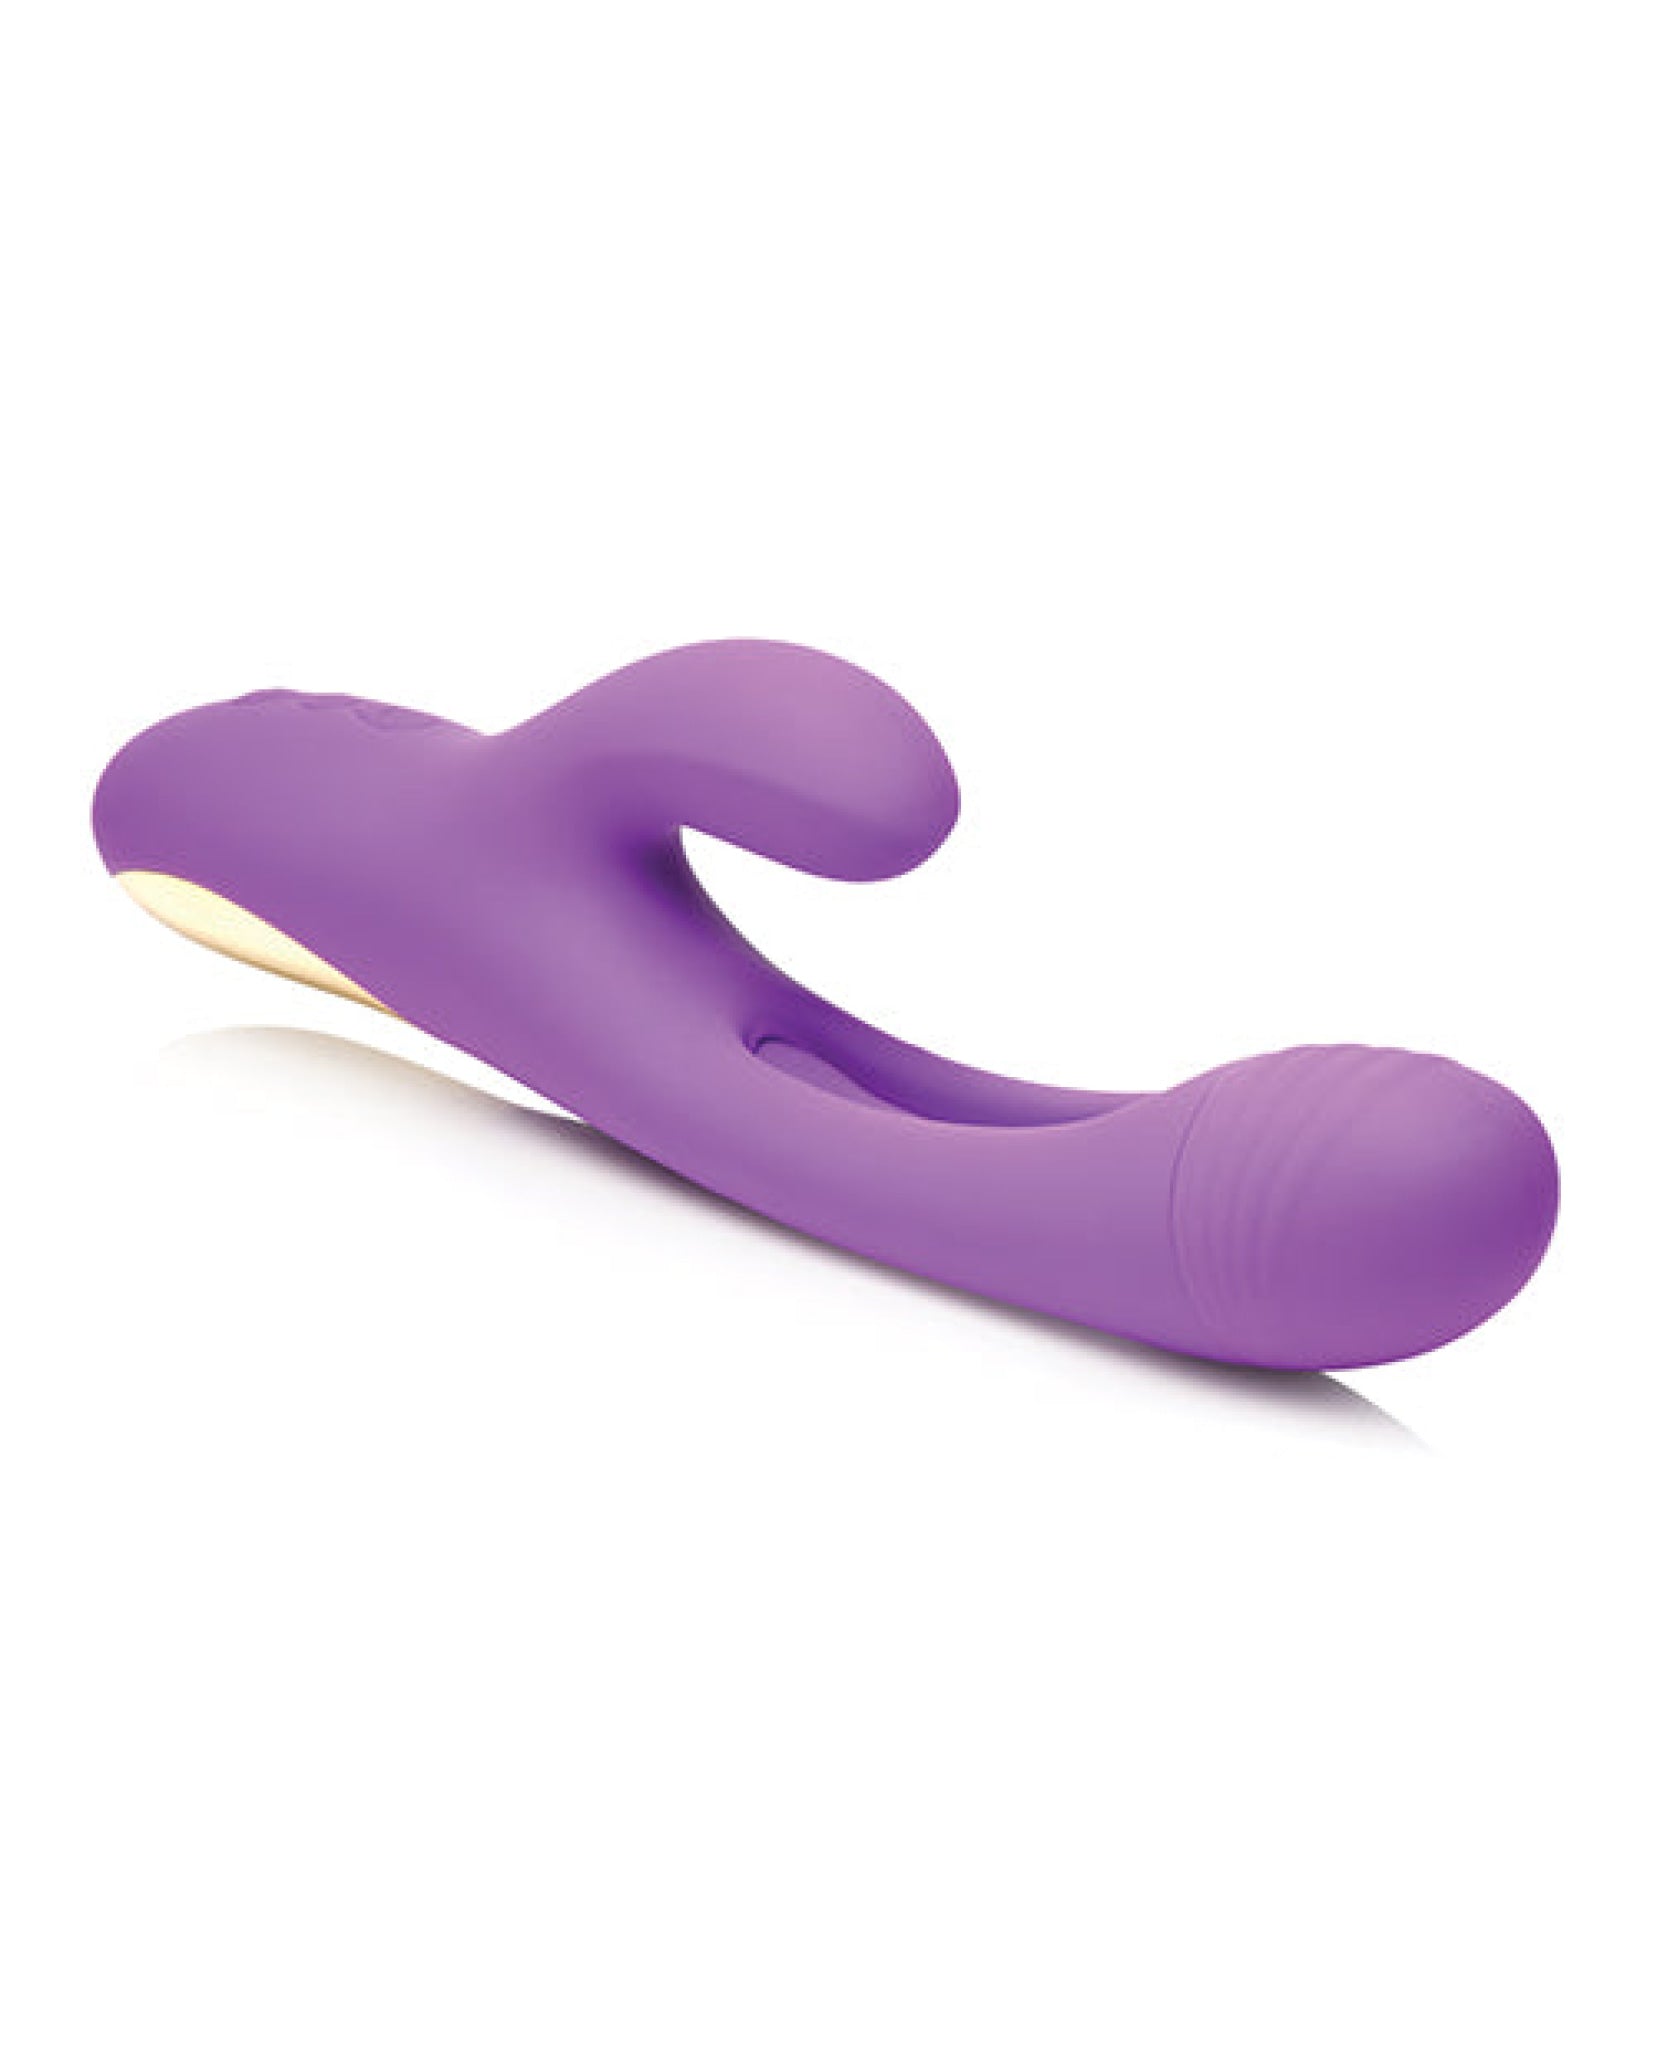 Inmi Tri-Flick Flicking Rabbit Vibrator - Purple Xr LLC